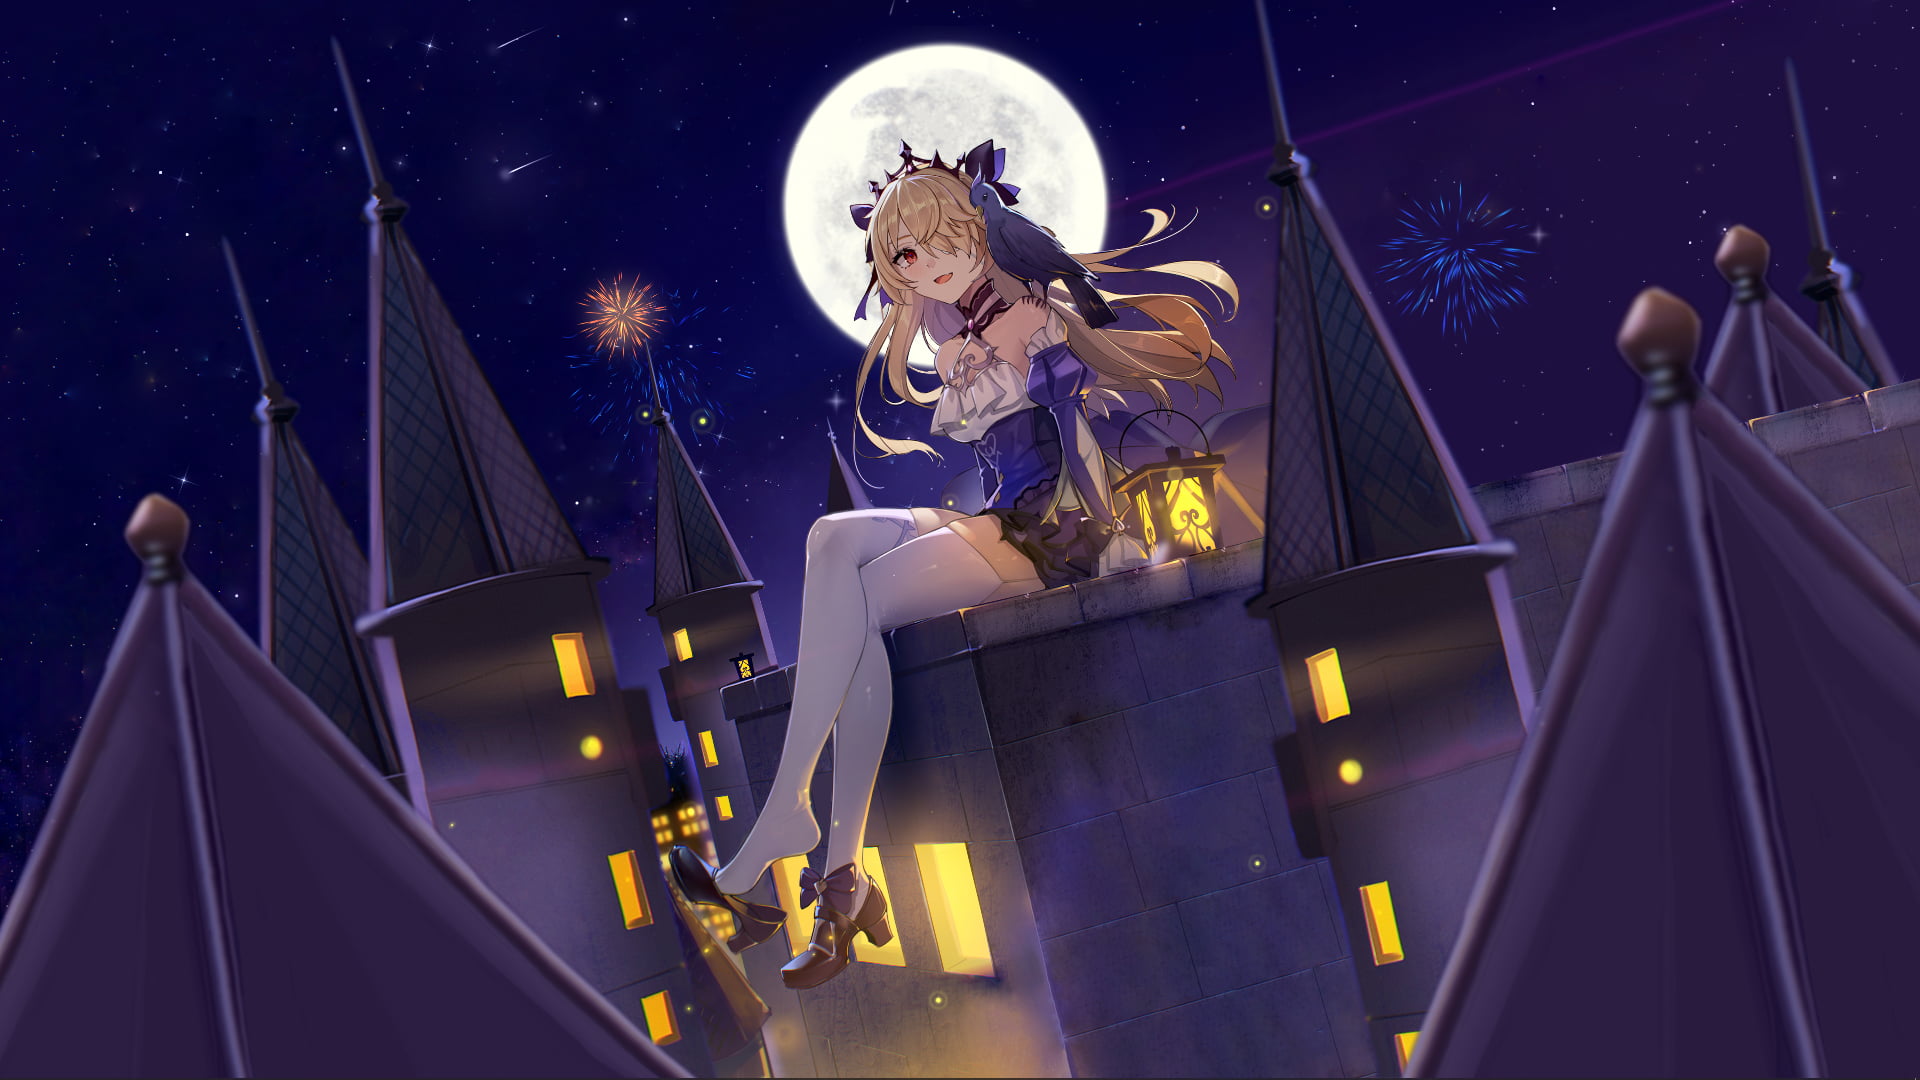 Fischl (Genshin Impact), anime girls, night, dress, Moon, fireworks